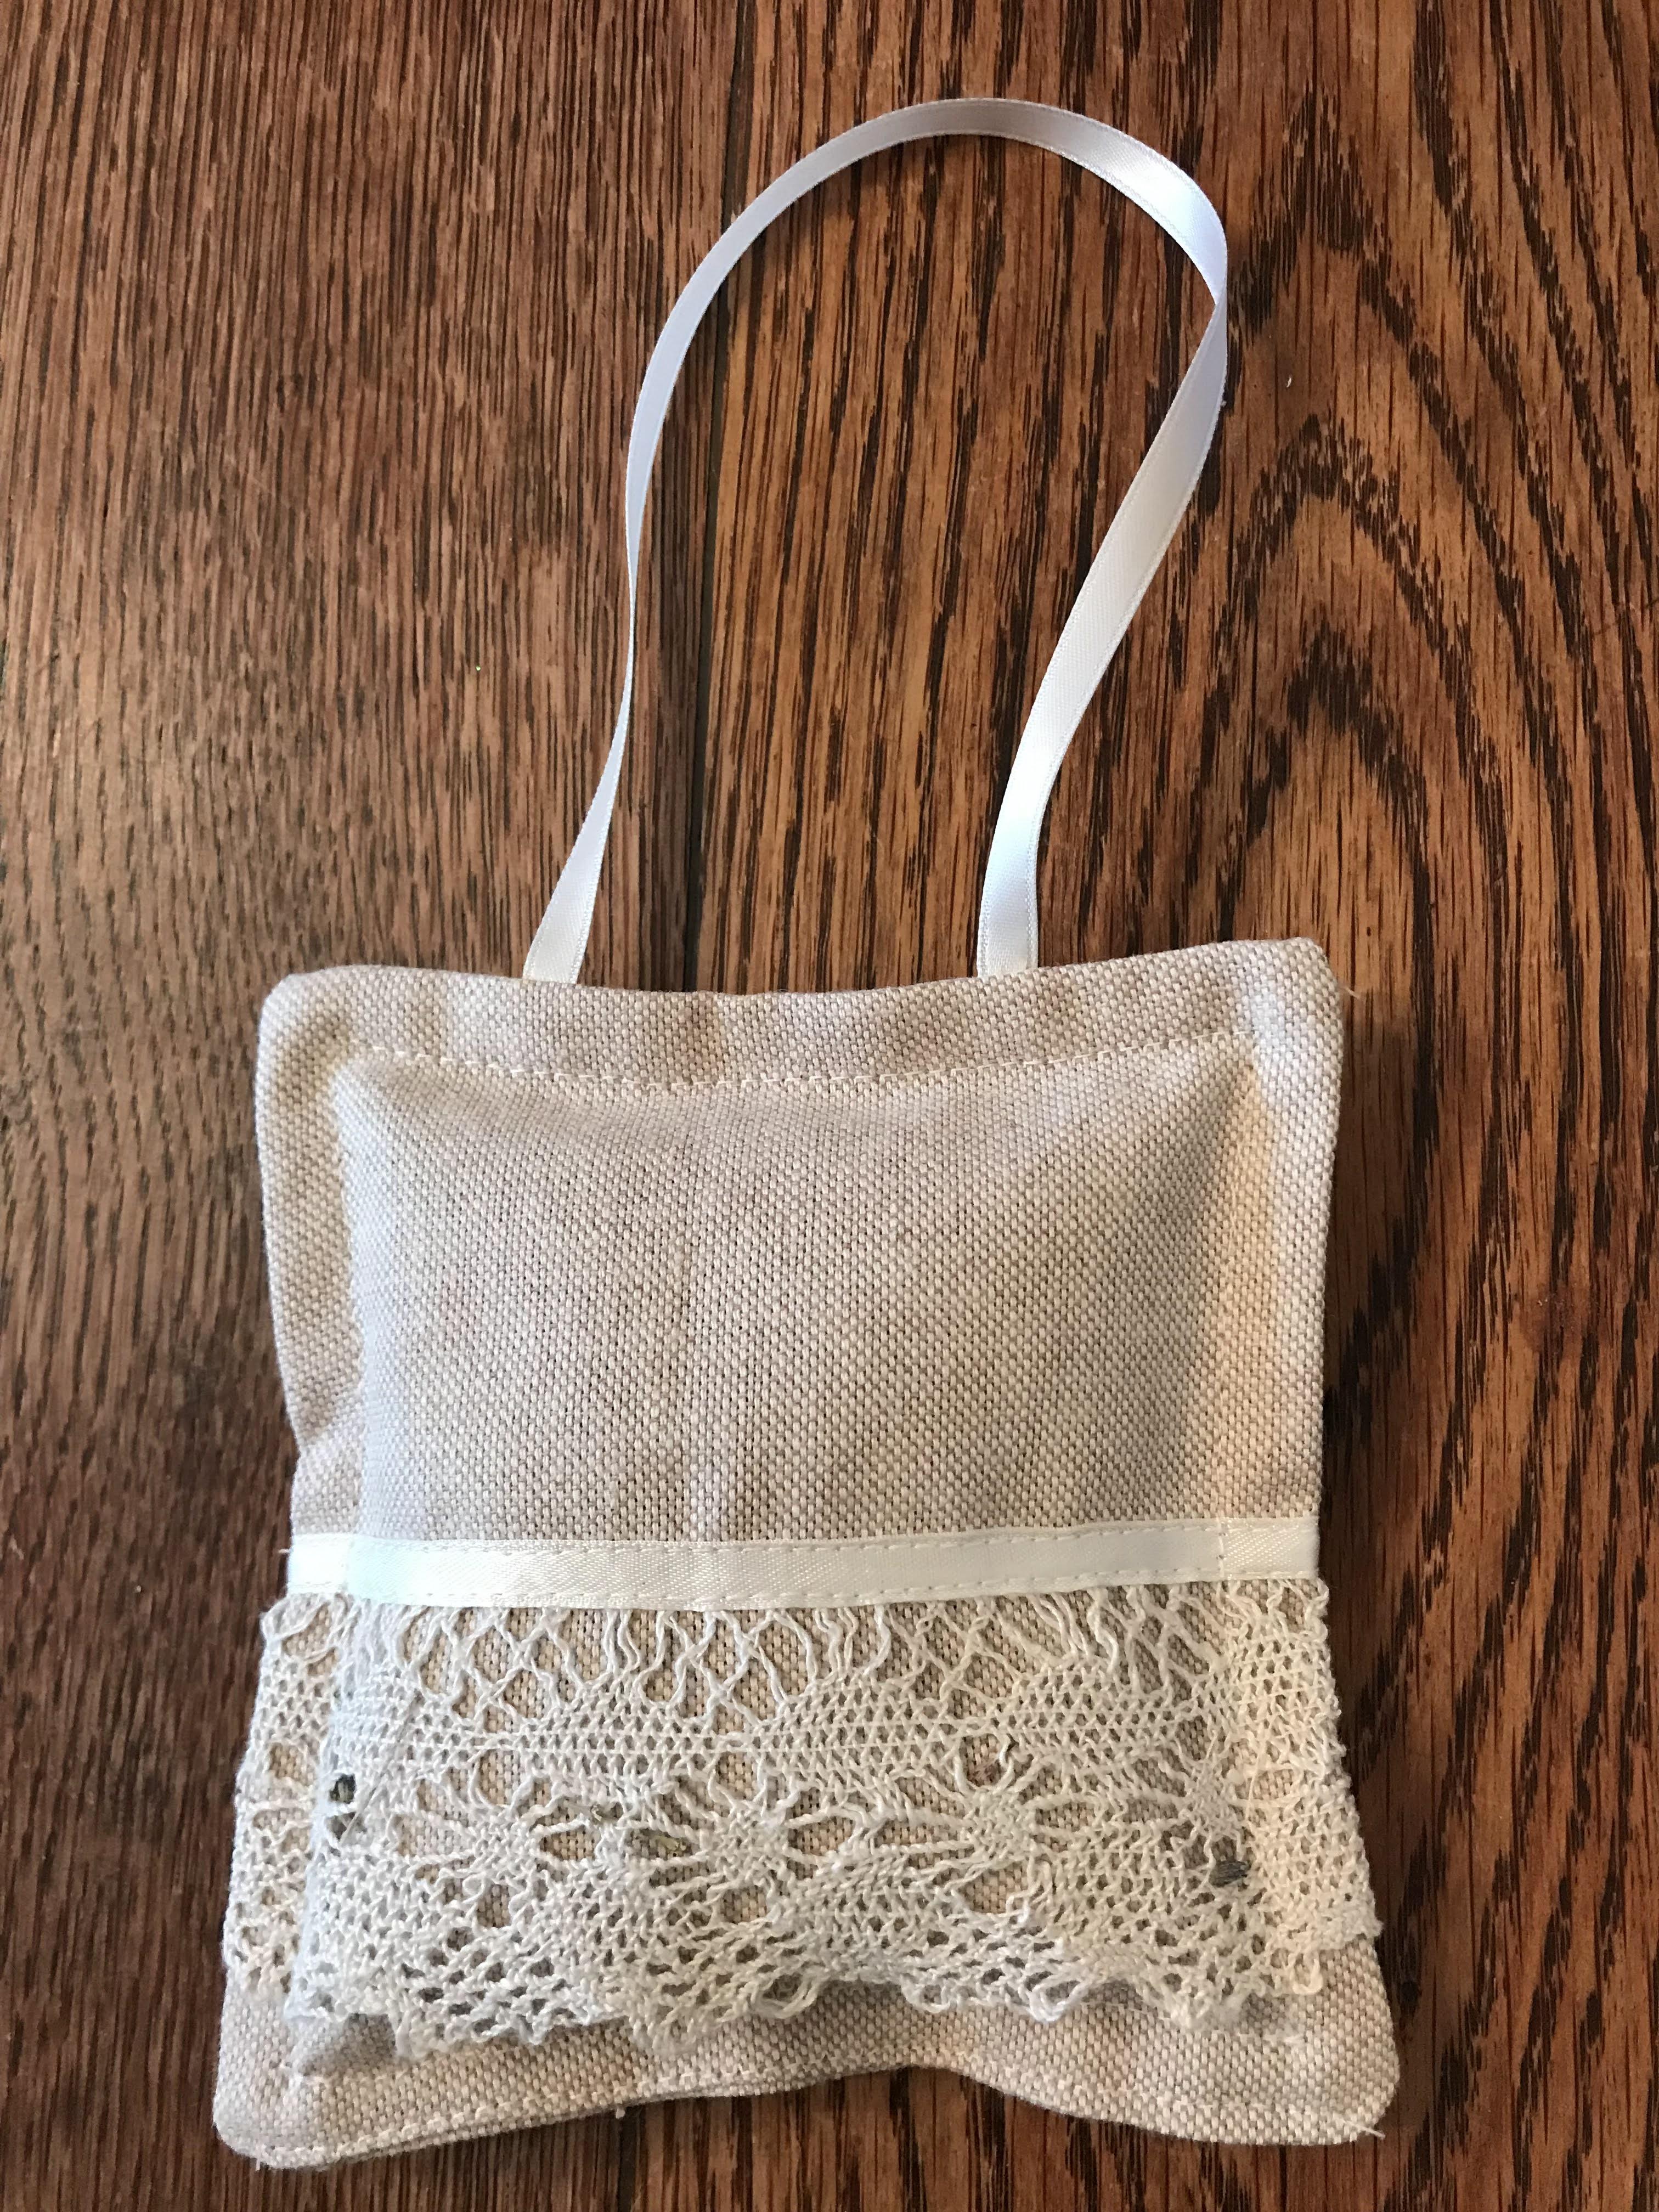 Lavender Bag - lace and cream ribbon